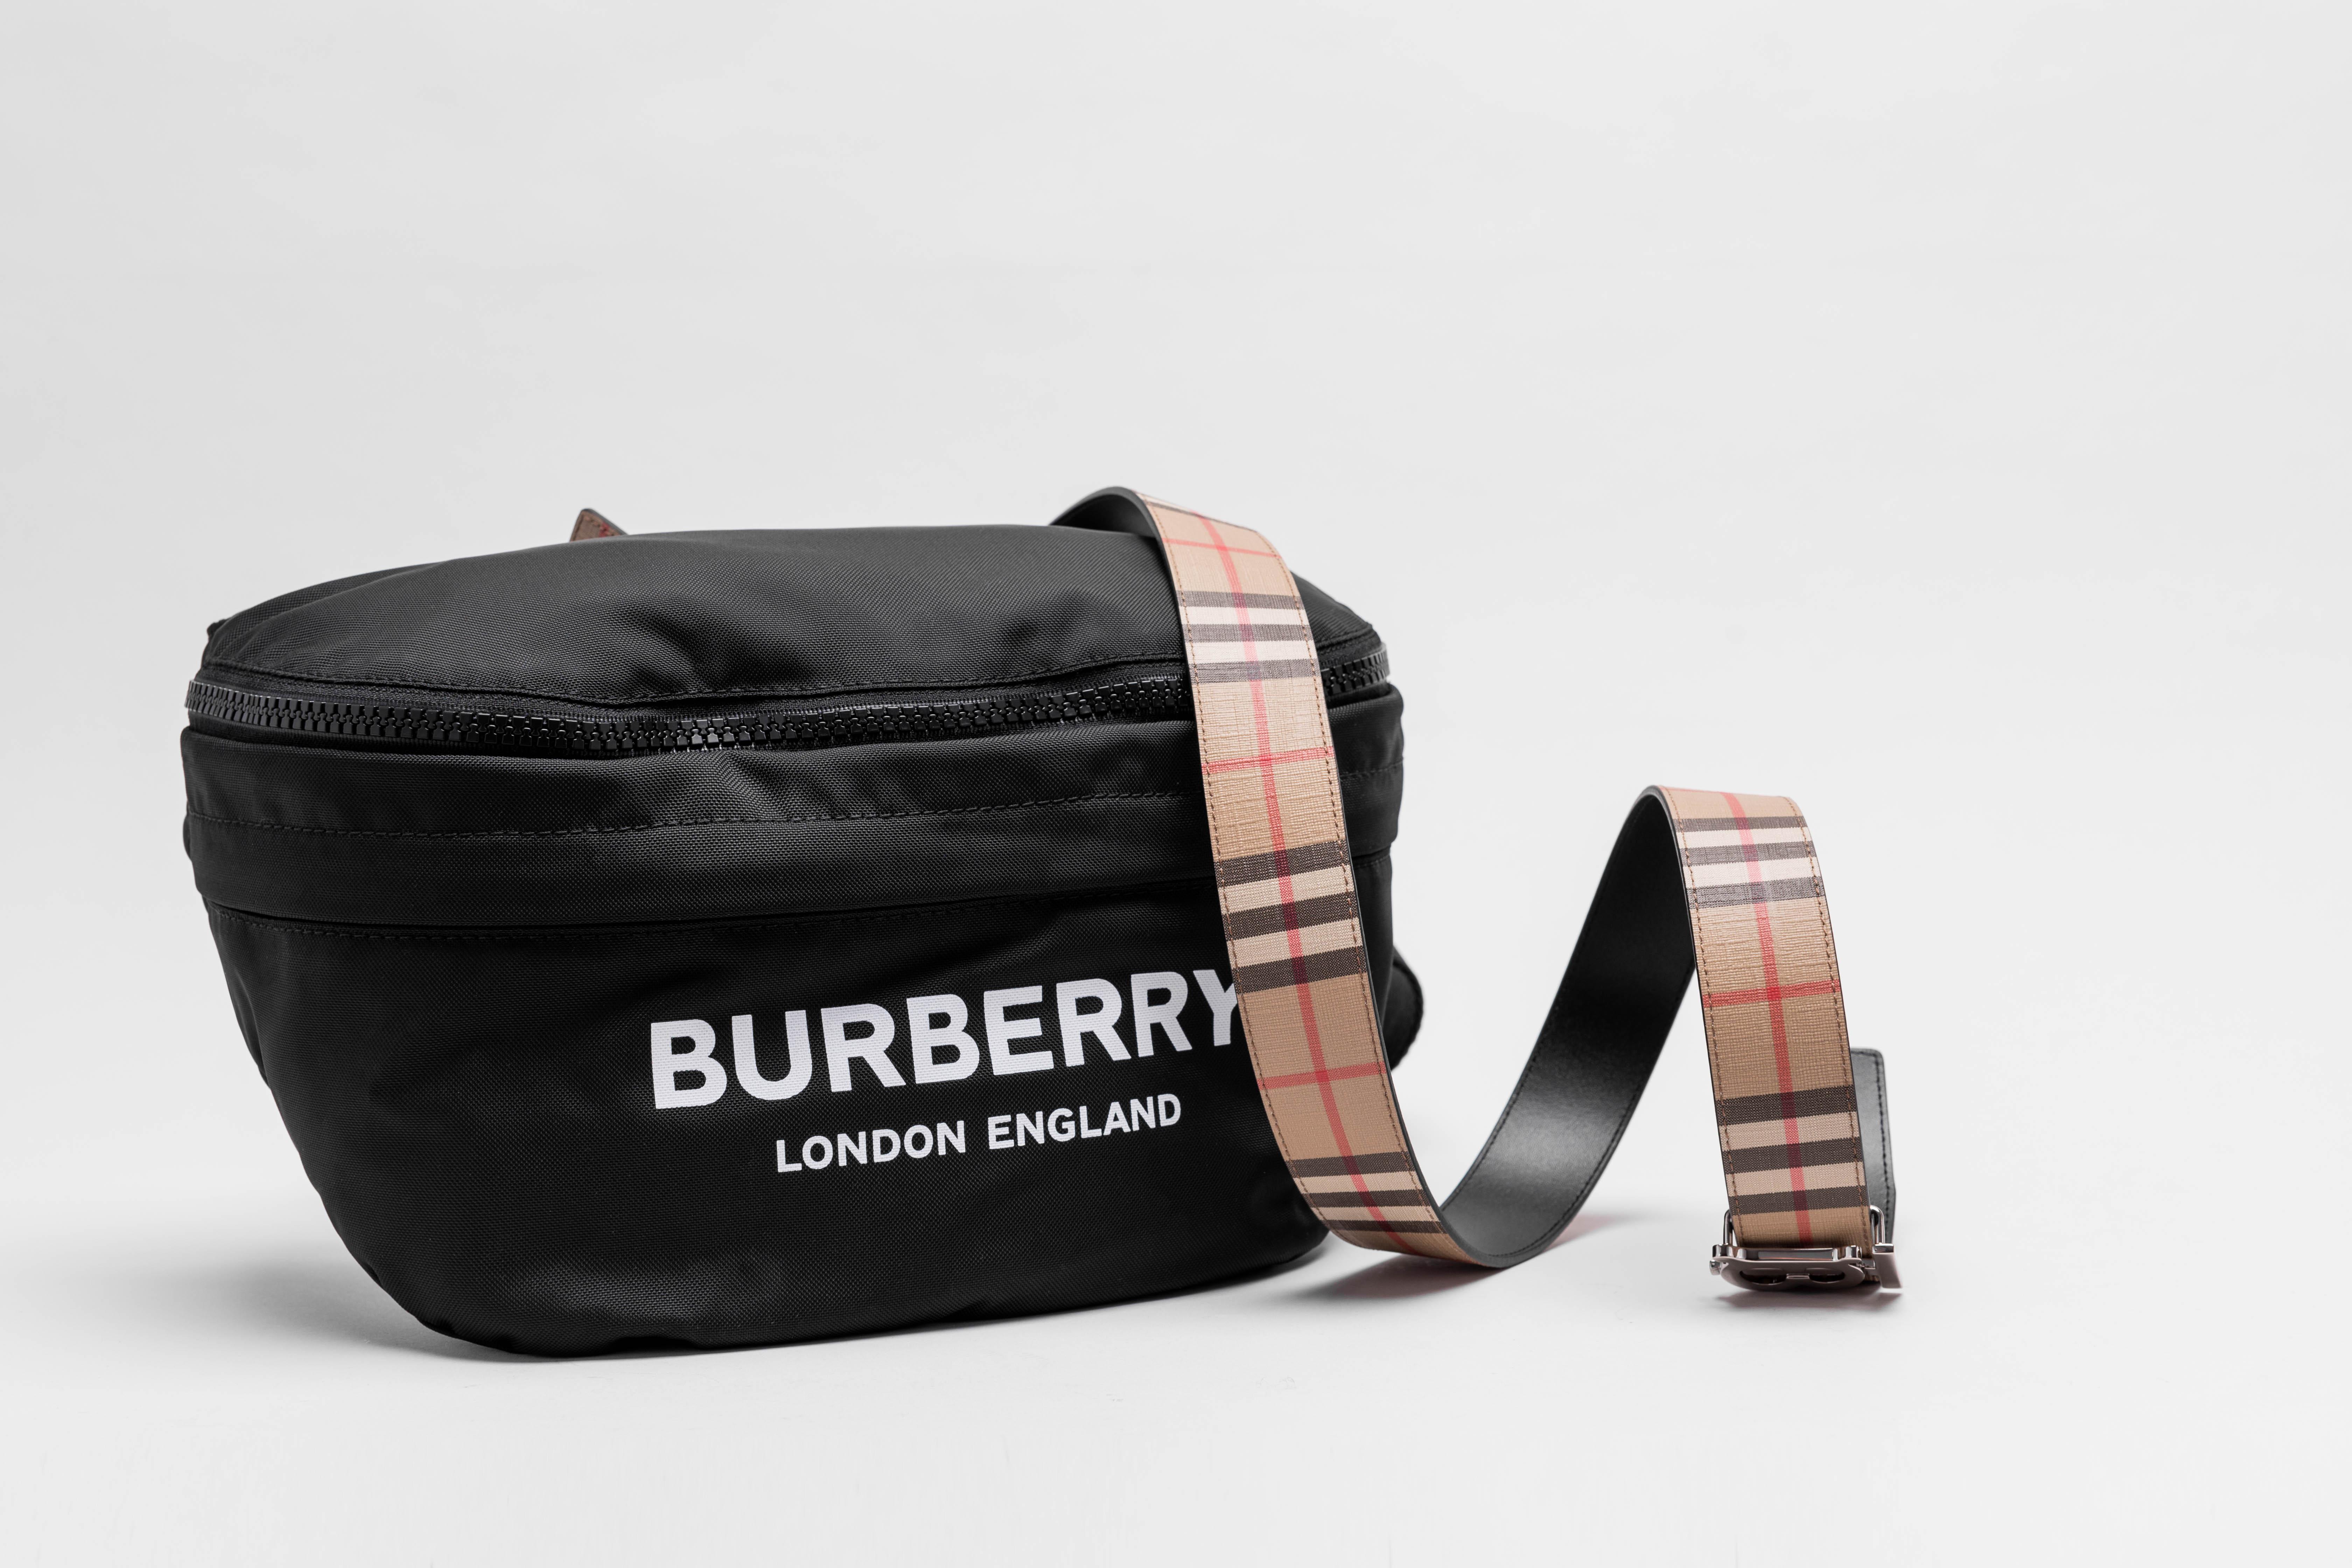 Best Burberry Handbags: 10 Popular Choices To Explore